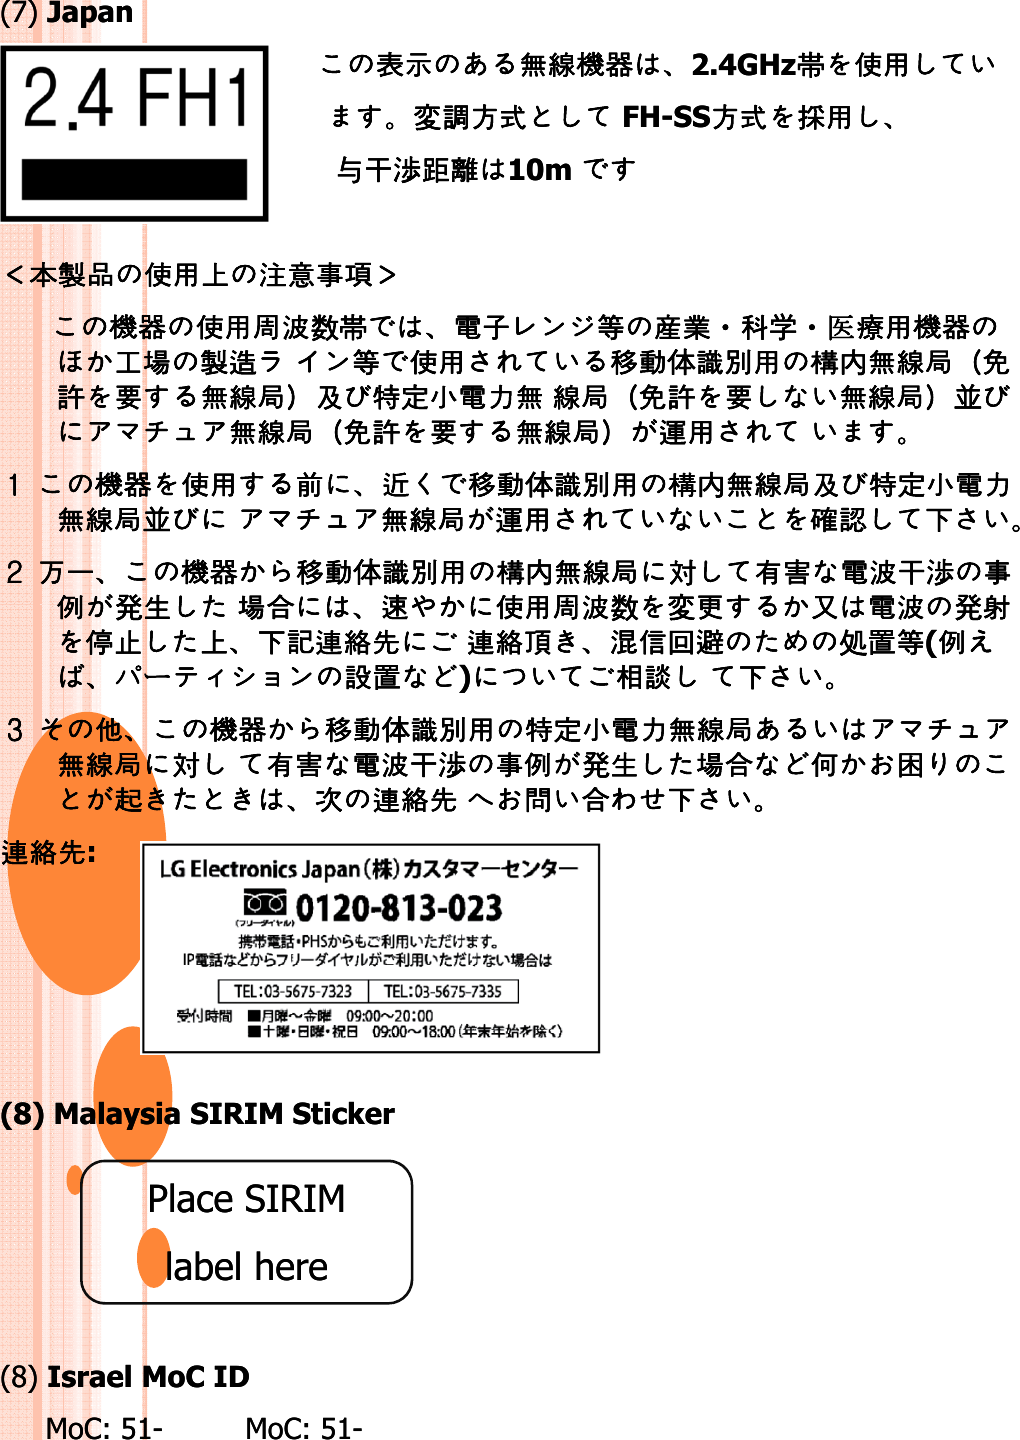 (7) (7) JapanJapan󷓨󶳾󶥹󶯨󶙂󶘭󷓨󶳾󶥹󶯨󶙂󶘭2.4GHz2.4GHz帯帯󶬧󶼰󶬧󶼰変変󷇞󶧸󶴊󷇞󶧸󶴊 FHFH--SSSS󶧸󶴊󷌍󶼰󶧸󶴊󷌍󶼰与与󶏘󶏘渉渉󶑍󶢾󶑍󶢾10m10m与与󶏘󶏘渉渉󶑍󶢾󶑍󶢾10m 10m 󶪈󷆰󷓭󶬧󶼰󶭾󷈘󷀚󶬢󷕍󶪈󷆰󷓭󶬧󶼰󶭾󷈘󷀚󶬢󷕍󶙂󶘭󶬧󶼰󷈎󷑾󶙂󶘭󶬧󶼰󷈎󷑾数帯数帯󷅓󷂑󶞫󶭧󶷪󷅓󷂑󶞫󶭧󶷪・・󶔣󶔣学学・医・医󶡭󶼰󶙂󶘭󶡭󶼰󶙂󶘭󶔓󷃂󷆰󷇡󶔓󷃂󷆰󷇡 󶞫󶬧󶼰󷀿󶞇󷳭󶴓󶩒󶼰󶖐󶞫󶬧󶼰󷀿󶞇󷳭󶴓󶩒󶼰󶖐内内󶥹󶯨󶖱󶤡󶥹󶯨󶖱󶤡󷕳󶼕󶥹󶯨󶖱󶘞󷑵󷅲󶰯󷅓󶠈󶥹󷕳󶼕󶥹󶯨󶖱󶘞󷑵󷅲󶰯󷅓󶠈󶥹󶯨󶖱󶤡󷕳󶼕󶥹󶯨󶖱󷲴󶯨󶖱󶤡󷕳󶼕󶥹󶯨󶖱󷲴󷕳󶼕󶥹󶯨󶖱󶘞󷑵󷅲󶰯󷅓󶠈󶥹󷕳󶼕󶥹󶯨󶖱󶘞󷑵󷅲󶰯󷅓󶠈󶥹󶯨󶖱󶤡󷕳󶼕󶥹󶯨󶖱󷲴󶯨󶖱󶤡󷕳󶼕󶥹󶯨󶖱󷲴󶥹󶯨󶖱󶤡󷕳󶼕󶥹󶯨󶖱󶽫󶼰󶥹󶯨󶖱󶤡󷕳󶼕󶥹󶯨󶖱󶽫󶼰  󶙂󶘭󶬧󶼰󷄳󶘌󷀿󶞇󷳭󶴓󶩒󶼰󶖐󶙂󶘭󶬧󶼰󷄳󶘌󷀿󶞇󷳭󶴓󶩒󶼰󶖐内内󶥹󶯨󶖱󶘞󷑵󷅲󶰯󷅓󶠈󶥹󶯨󶖱󶘞󷑵󷅲󶰯󷅓󶠈󶥹󶯨󶖱󷲴󶥹󶯨󶖱󷲴 󶥹󶯨󶖱󶽫󶼰󷘒󷁩󷔇󶥹󶯨󶖱󶽫󶼰󷘒󷁩󷔇 󶣠󷁯󶙂󶘭󷀿󶞇󷳭󶴓󶩒󶼰󶖐󶣠󷁯󶙂󶘭󷀿󶞇󷳭󶴓󶩒󶼰󶖐内内󶥹󶯨󶖱󶥹󶯨󶖱対対󶾽󷕔󷅓󷑾󶏘󶾽󷕔󷅓󷑾󶏘渉渉󶬢󶬢󶠹󶠹発発󶮦󶮦󷃂󷔶󶱘󶬧󶼰󷈎󷑾󷃂󷔶󶱘󶬧󶼰󷈎󷑾数数変変󶒠󶼽󷅓󷑾󶒠󶼽󷅓󷑾発発󶬴󶬴󶠹󶠹発発󶮦󶮦󷃂󷔶󶱘󶬧󶼰󷈎󷑾󷃂󷔶󶱘󶬧󶼰󷈎󷑾数数変変󶒠󶼽󷅓󷑾󶒠󶼽󷅓󷑾発発󶬴󶬴󷅮󷉧󶭾󷔇󶙜󶠙󶞽󶯙󷅮󷉧󶭾󷔇󶙜󶠙󶞽󶯙 󶠙󶞽󷆠󷗰󶴙󷙄󷓹󶠙󶞽󷆠󷗰󶴙󷙄󷓹処処󷏹󶞫󷏹󶞫((󶠹󶠹ーー󶰀󷏹󶰀󷏹))󶮓󶜠󶮓󶜠 󷔇󷔇 󷐔󶙂󶘭󷀿󶞇󷳭󶴓󶩒󶼰󷑵󷅲󶰯󷅓󶠈󶥹󶯨󶖱󷐔󶙂󶘭󷀿󶞇󷳭󶴓󶩒󶼰󷑵󷅲󶰯󷅓󶠈󶥹󶯨󶖱󶥹󶯨󶖱󶥹󶯨󶖱対対 󶾽󷕔󷅓󷑾󶏘󶾽󷕔󷅓󷑾󶏘渉渉󶬢󶠹󶬢󶠹発発󶮦󷃂󷔶󷔈󶔁󶮦󷃂󷔶󷔈󶔁󶙟󷋅󶠙󶞽󶯙󶙟󷋅󶠙󶞽󶯙 󶦉󷔶󷔇󶦉󷔶󷔇󶠙󶞽󶯙󶠙󶞽󶯙::(8) Malaysia SIRIM Sticker(8) Malaysia SIRIM StickerPlace SIRIM Place SIRIM (8) (8) Israel Israel MoCMoC IDIDMoCMoC: 51: 51--MoCMoC: 51: 51--label herelabel here